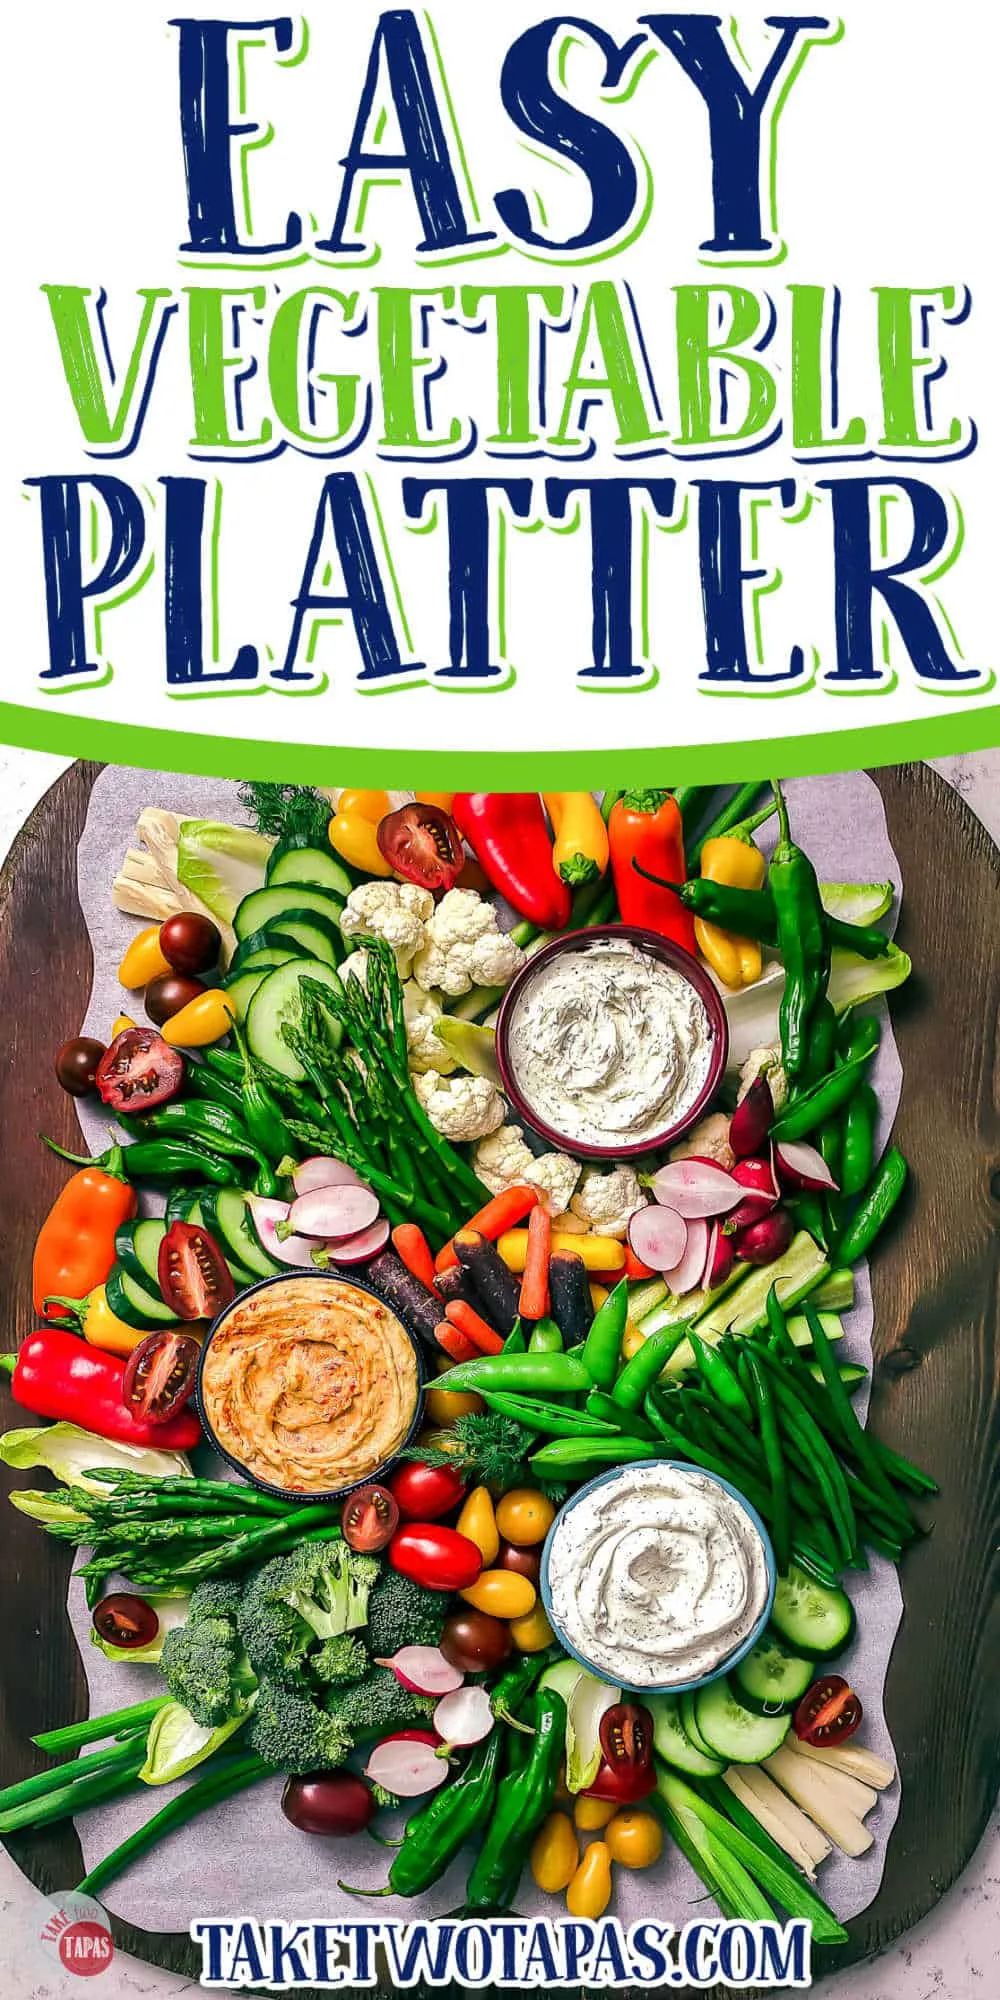 Pinterest image of a vegetable platter